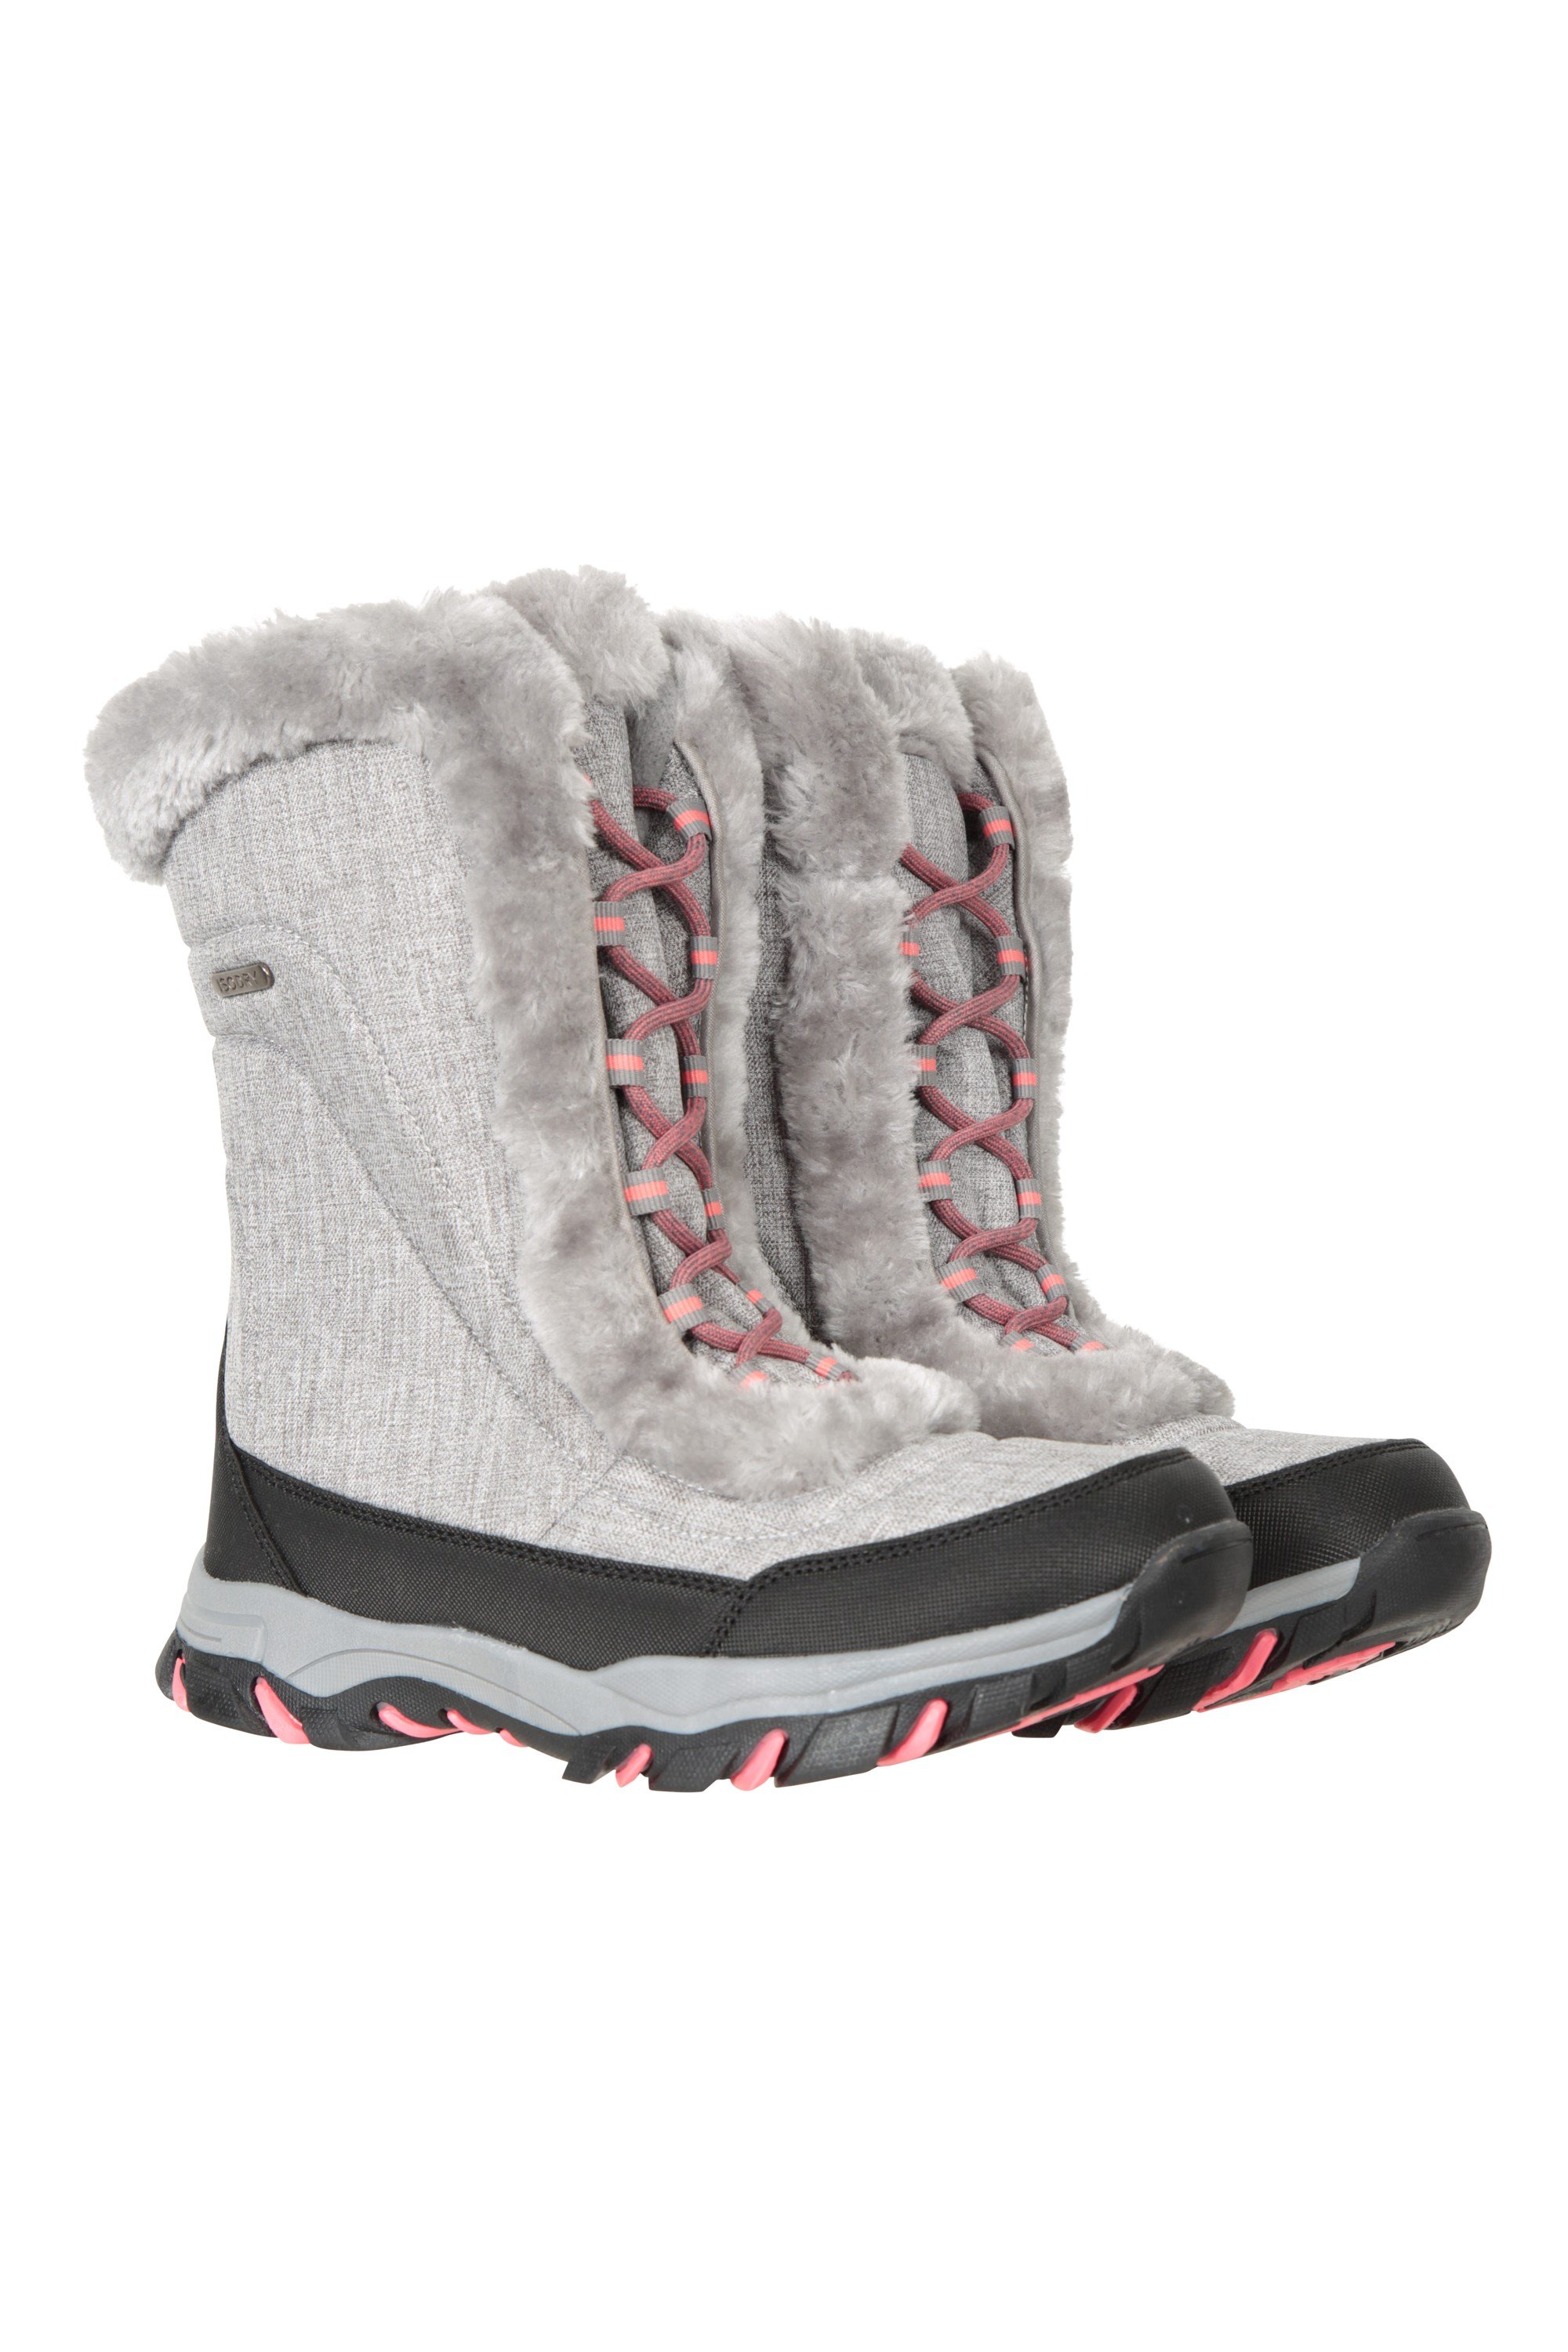 Ohio Womens Snow Boots - Grey